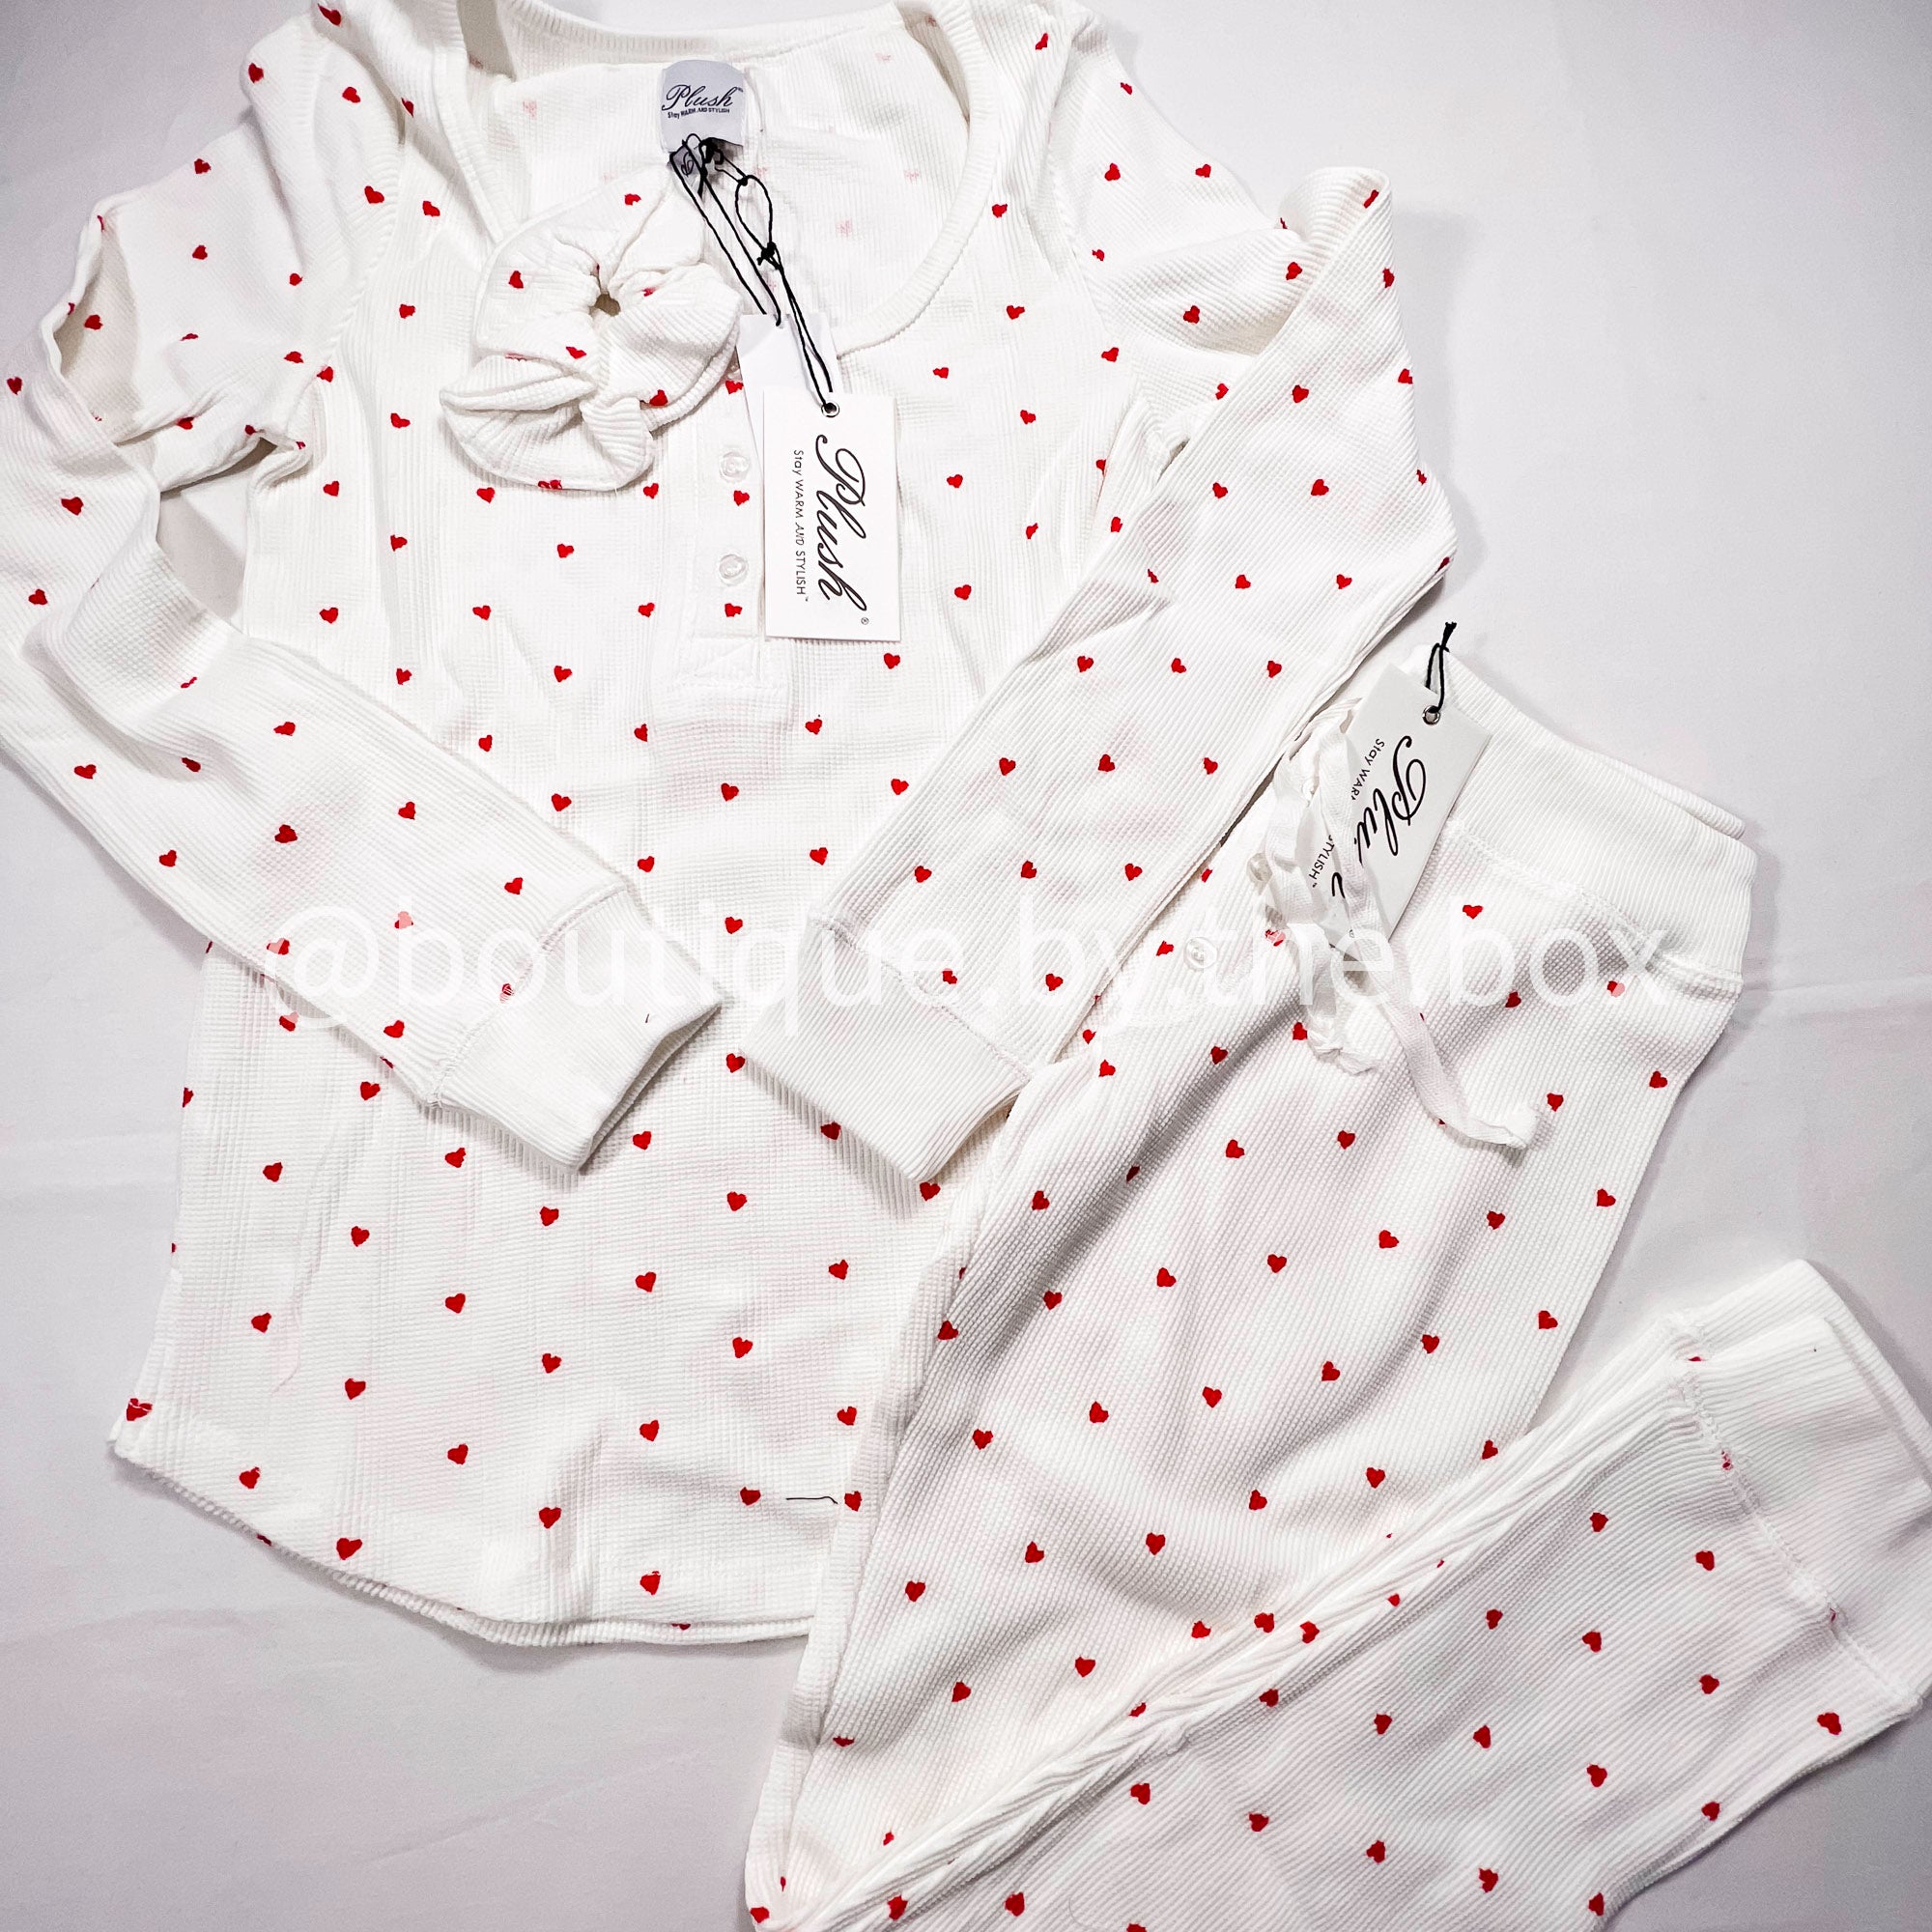 Plush Sleepwear Revolve Women's New Wholesale